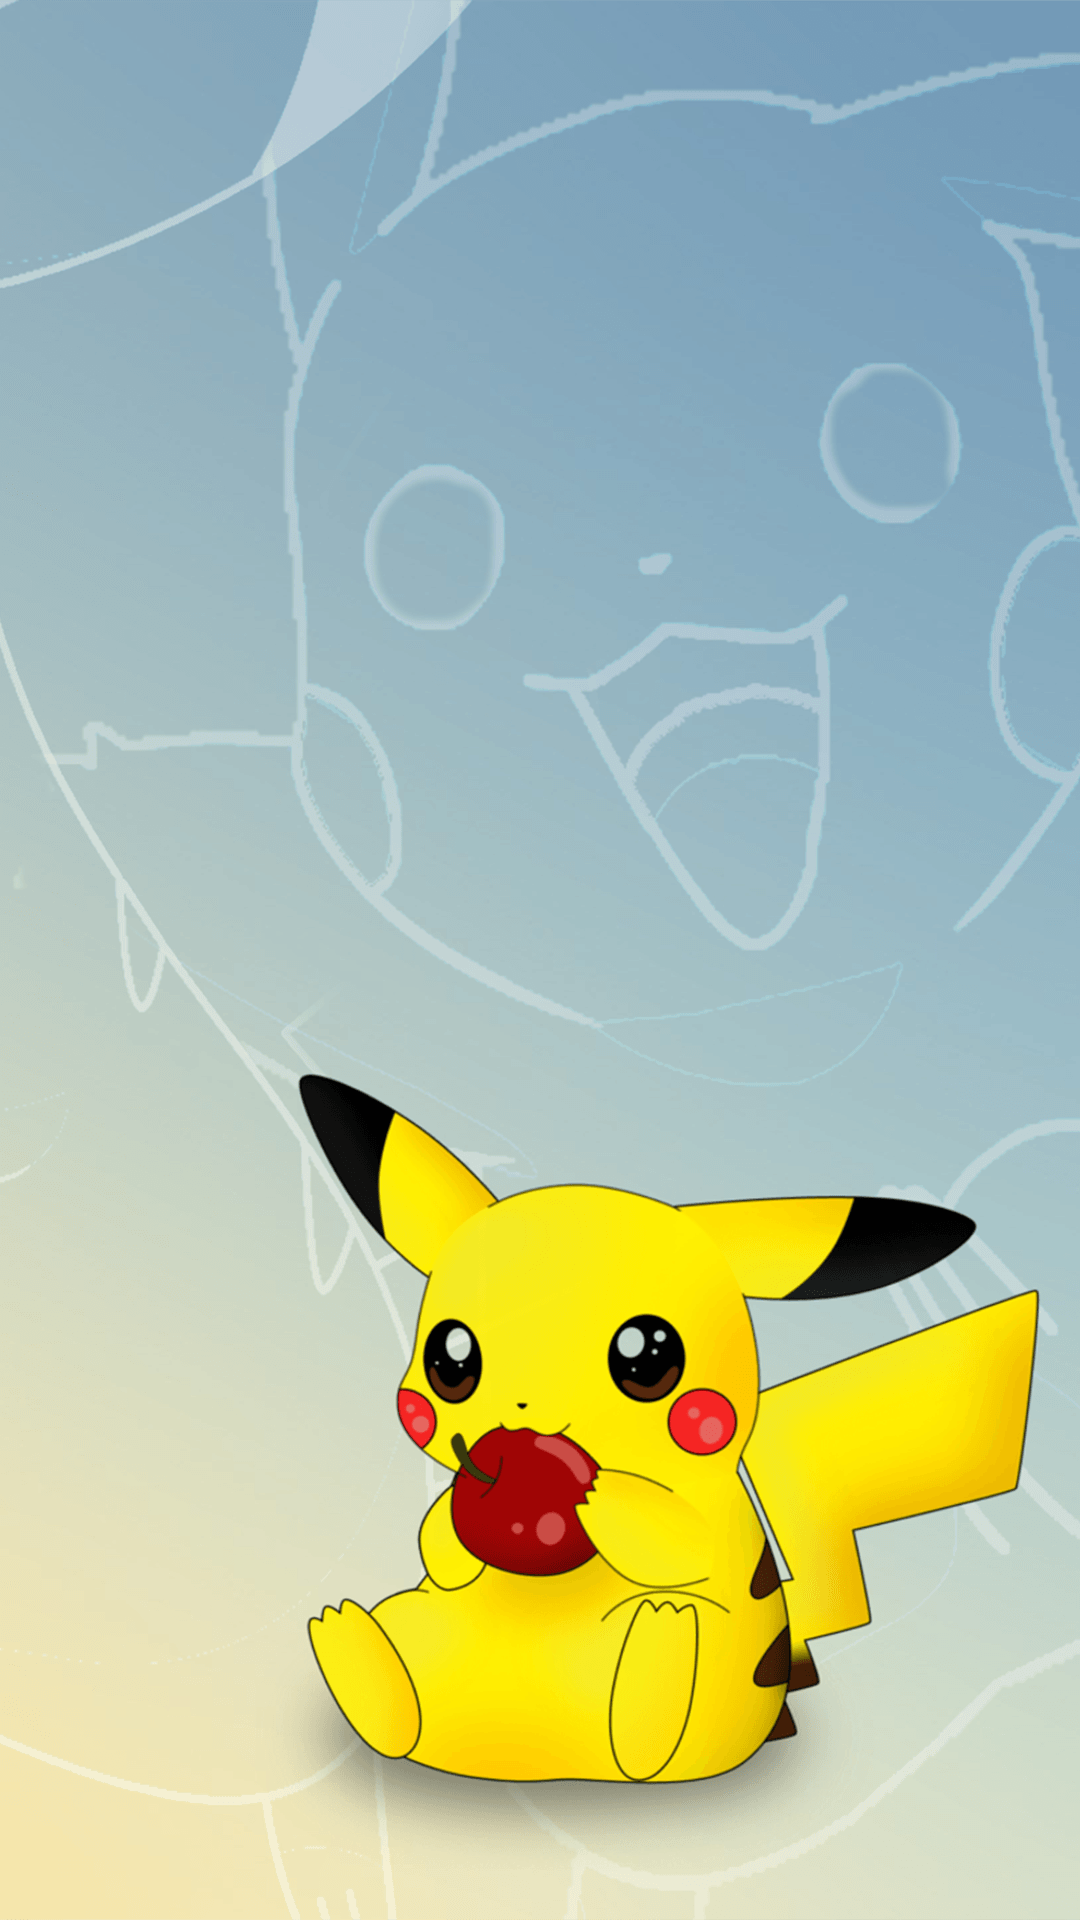 Pokemon iPhone Wallpaper Download free